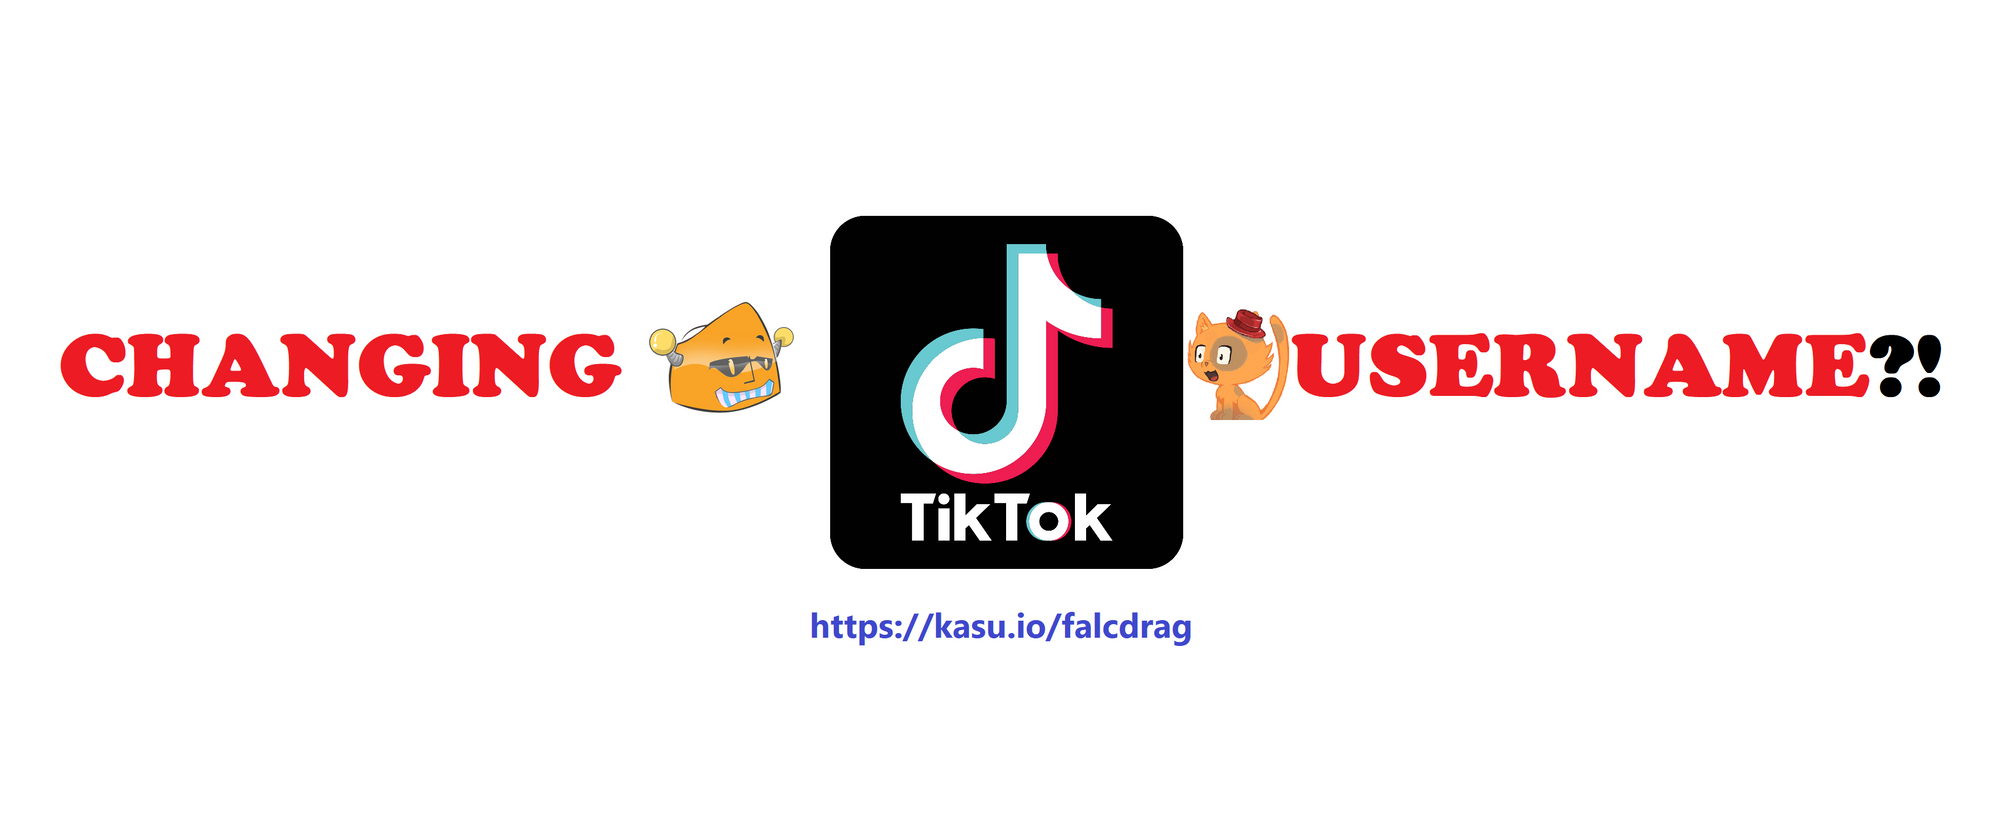 How to change TikTok username?